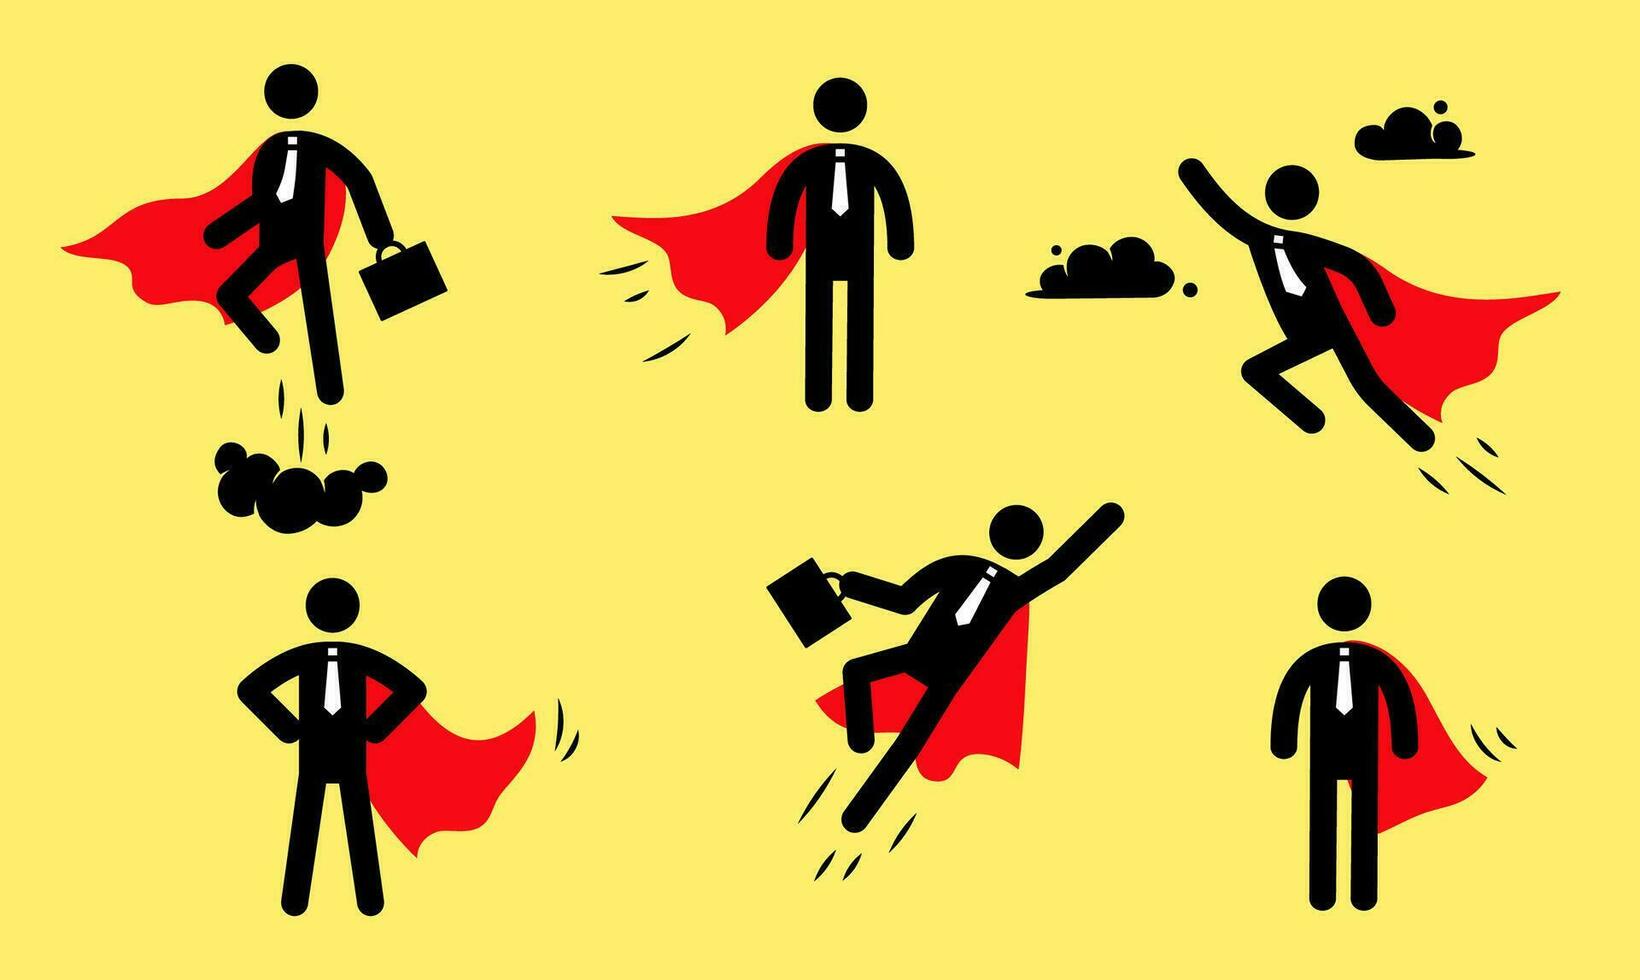 Superhero business pictogram man icon set. Superhero businessman flying stick figure. Victory worker, employer pictogram person vector